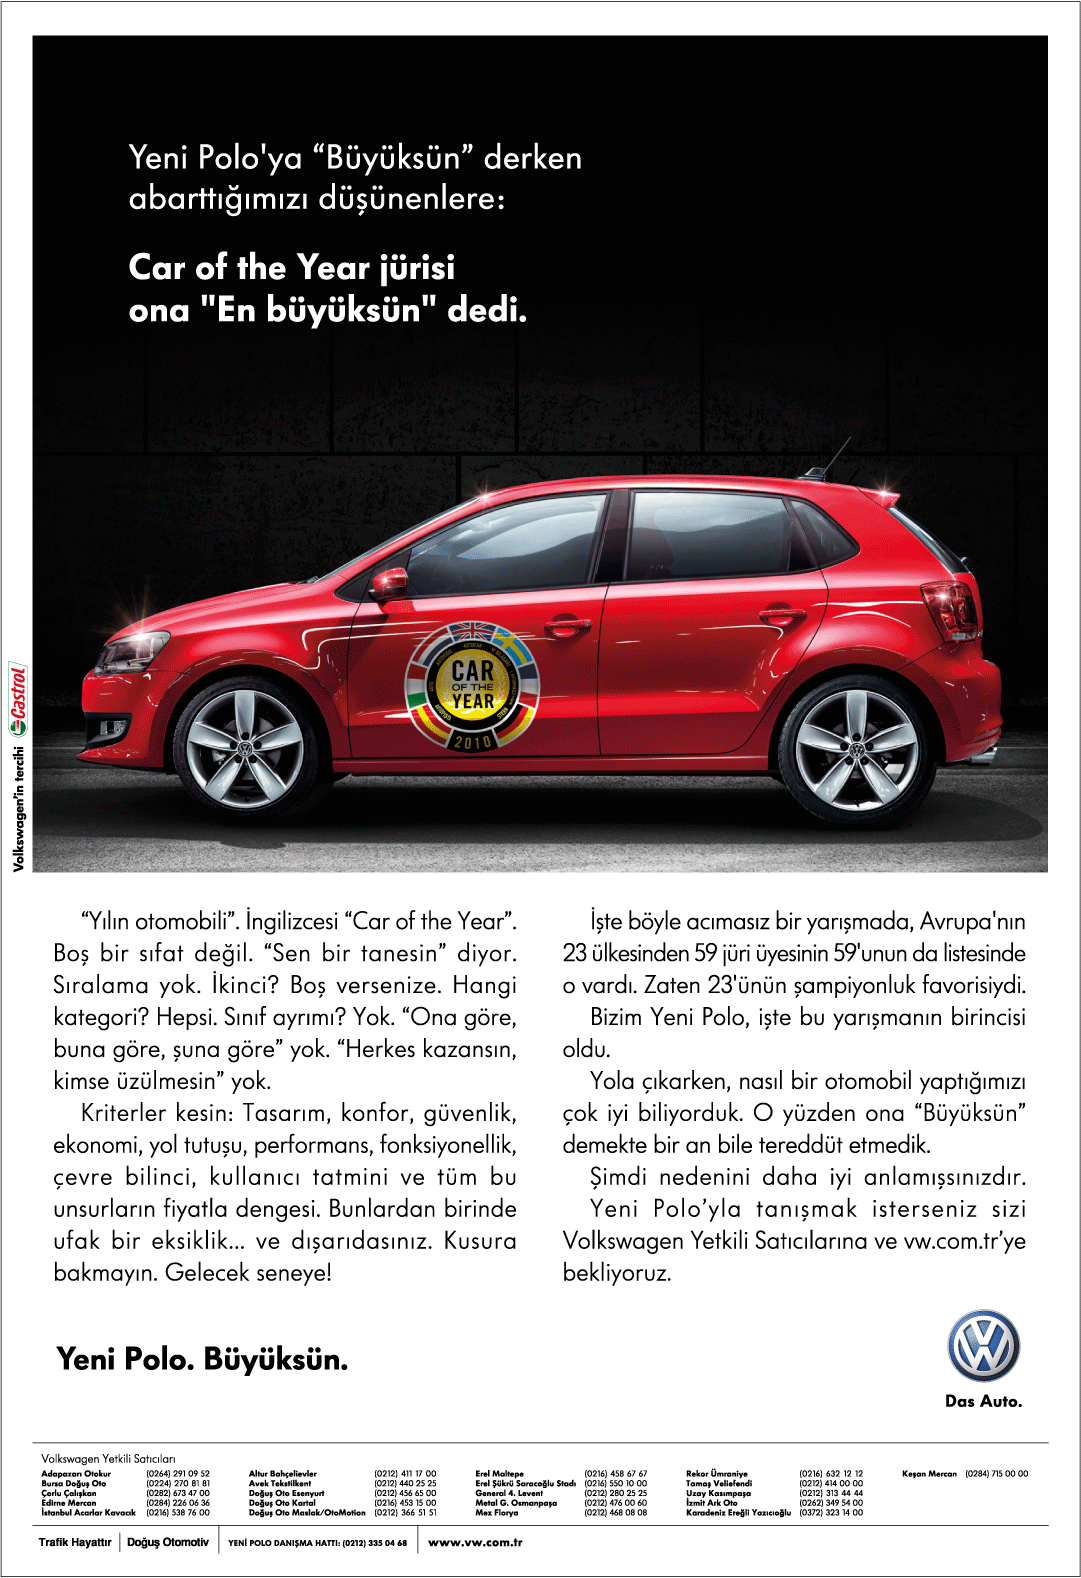 volkswagen Automobil print ad